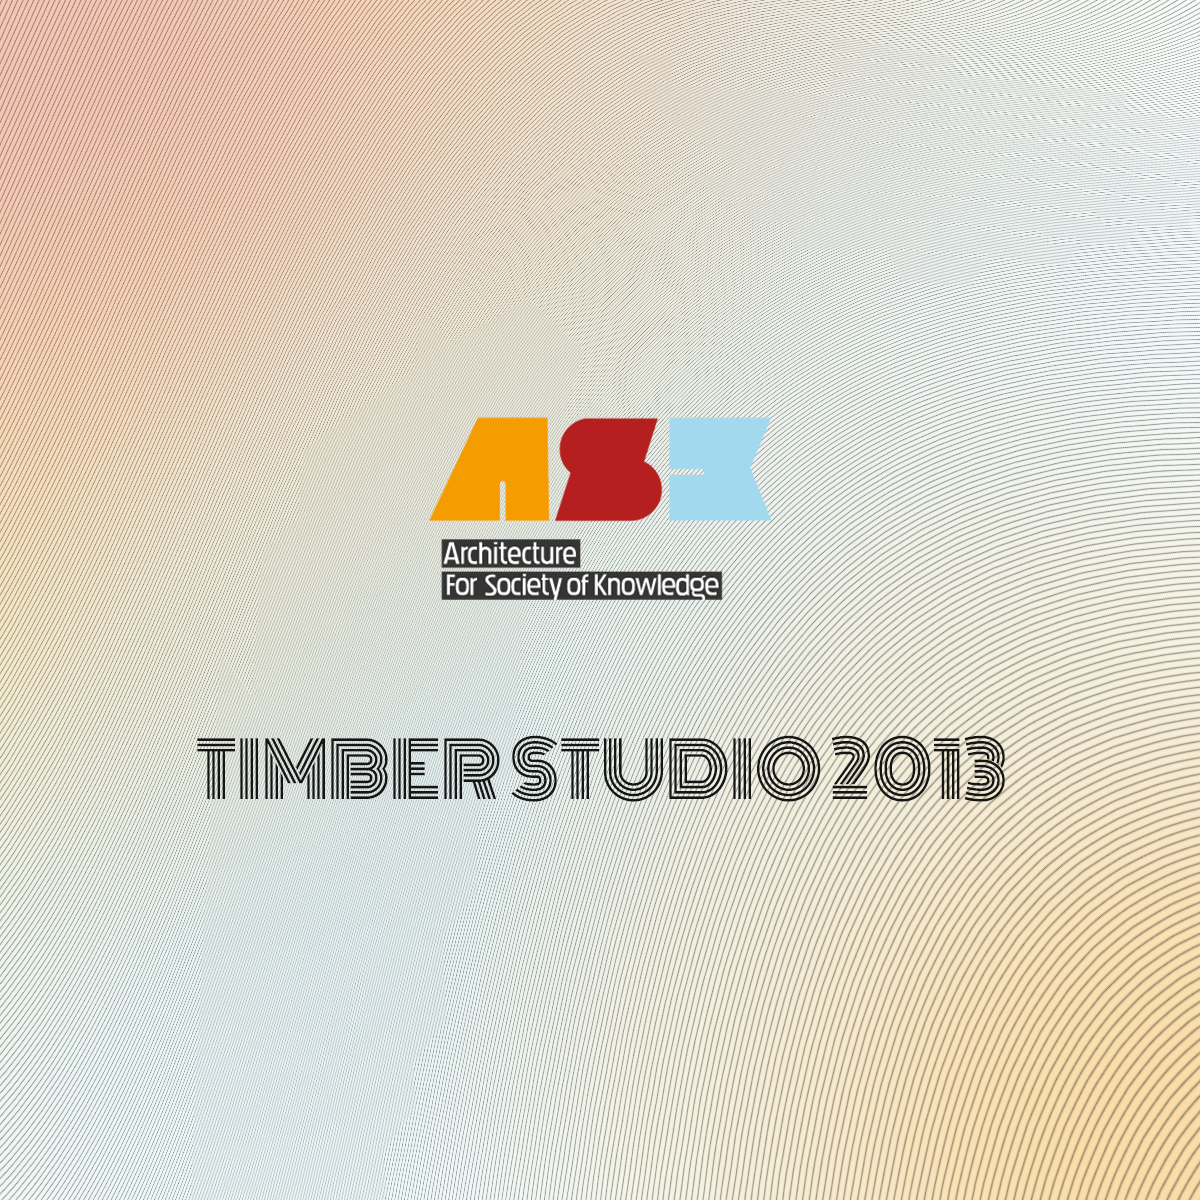 Timber Studio 2013